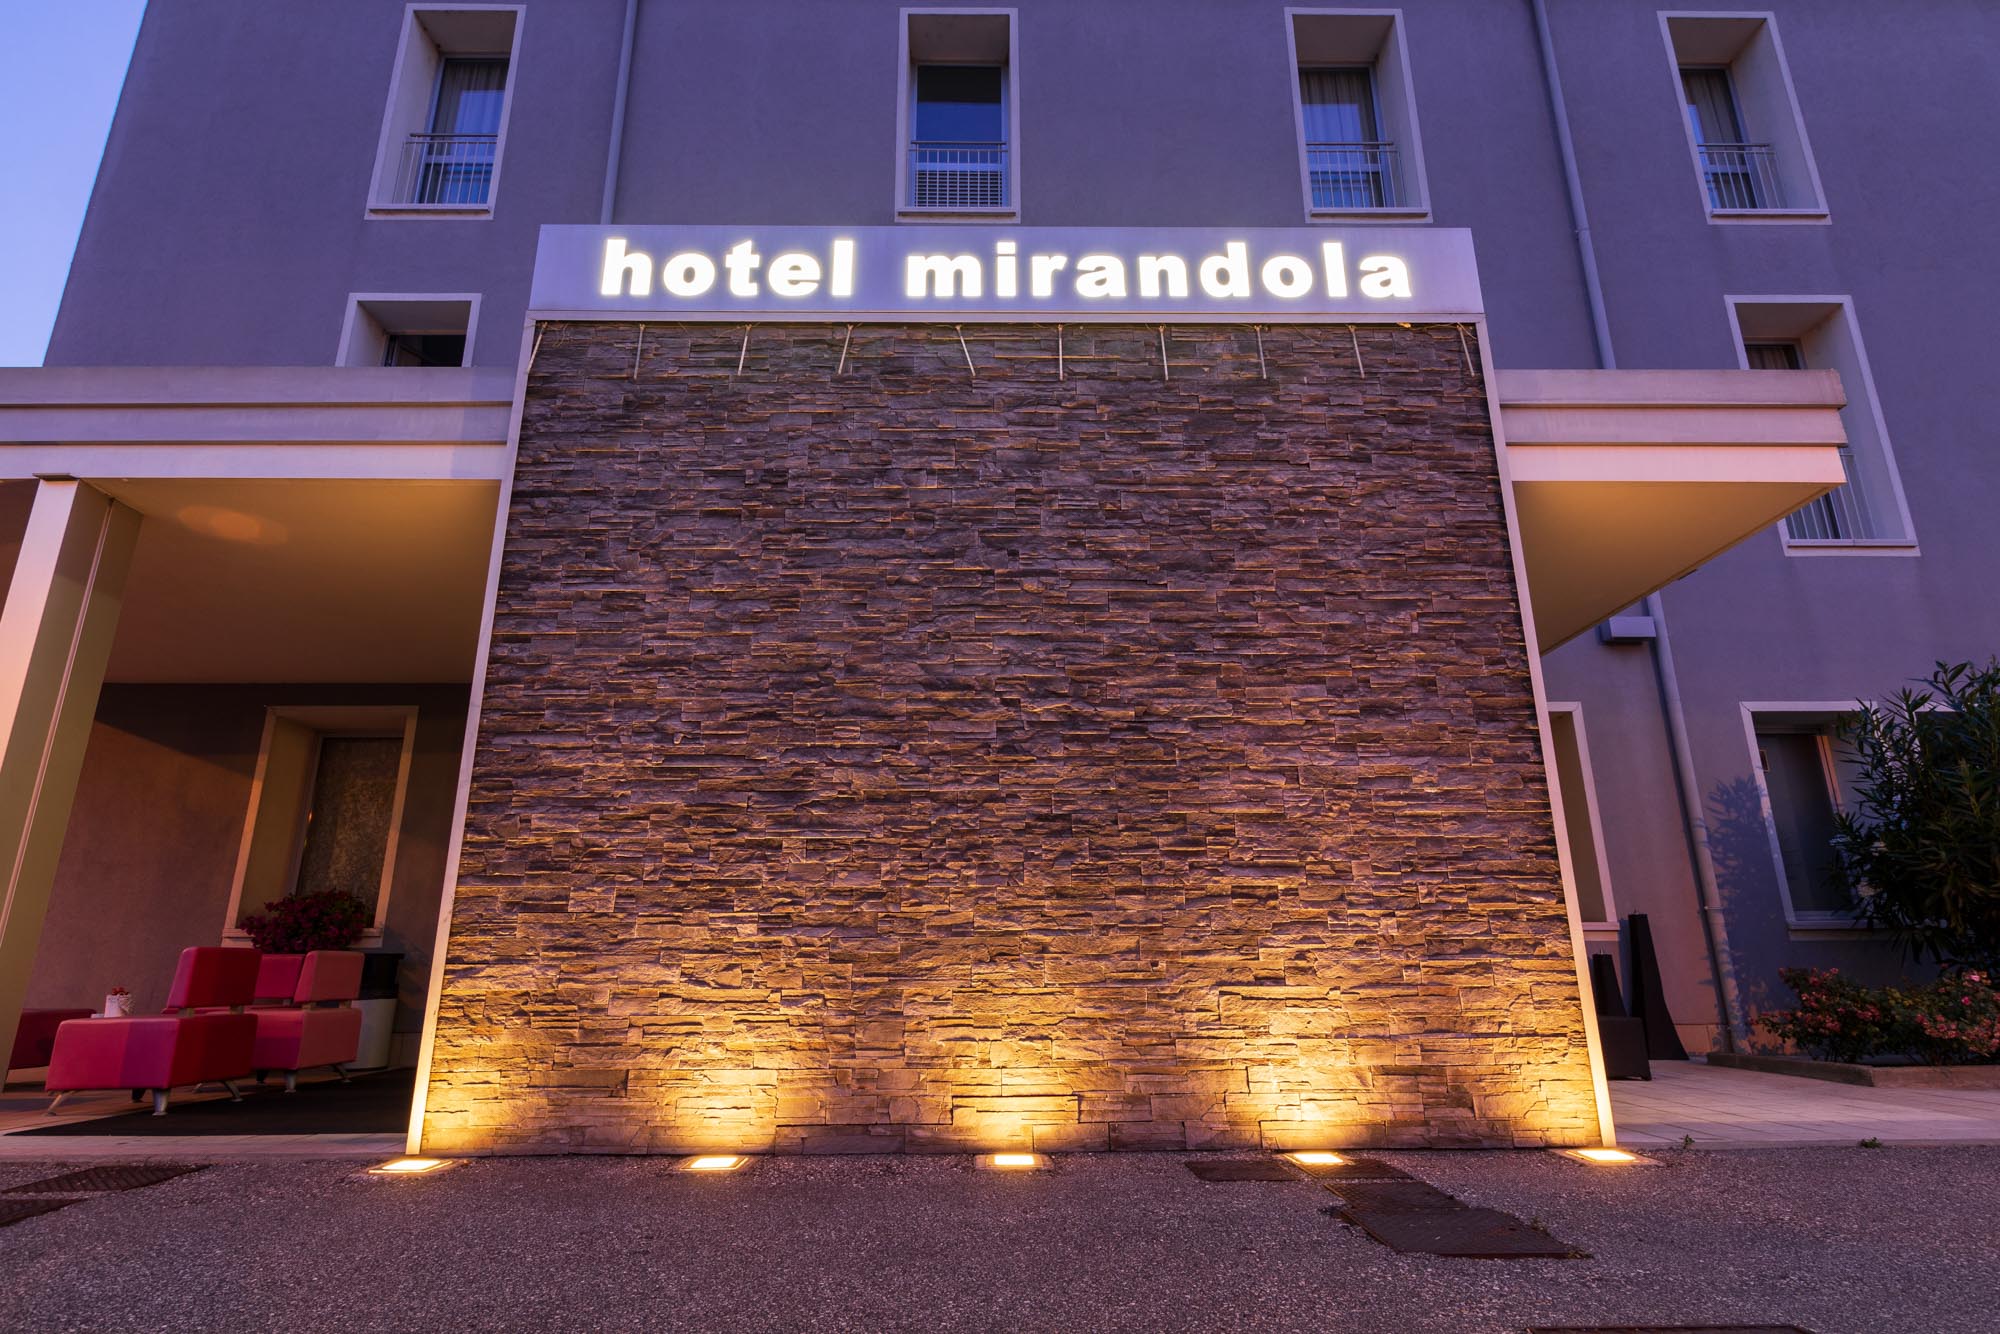 (c) Hotelmirandola.it